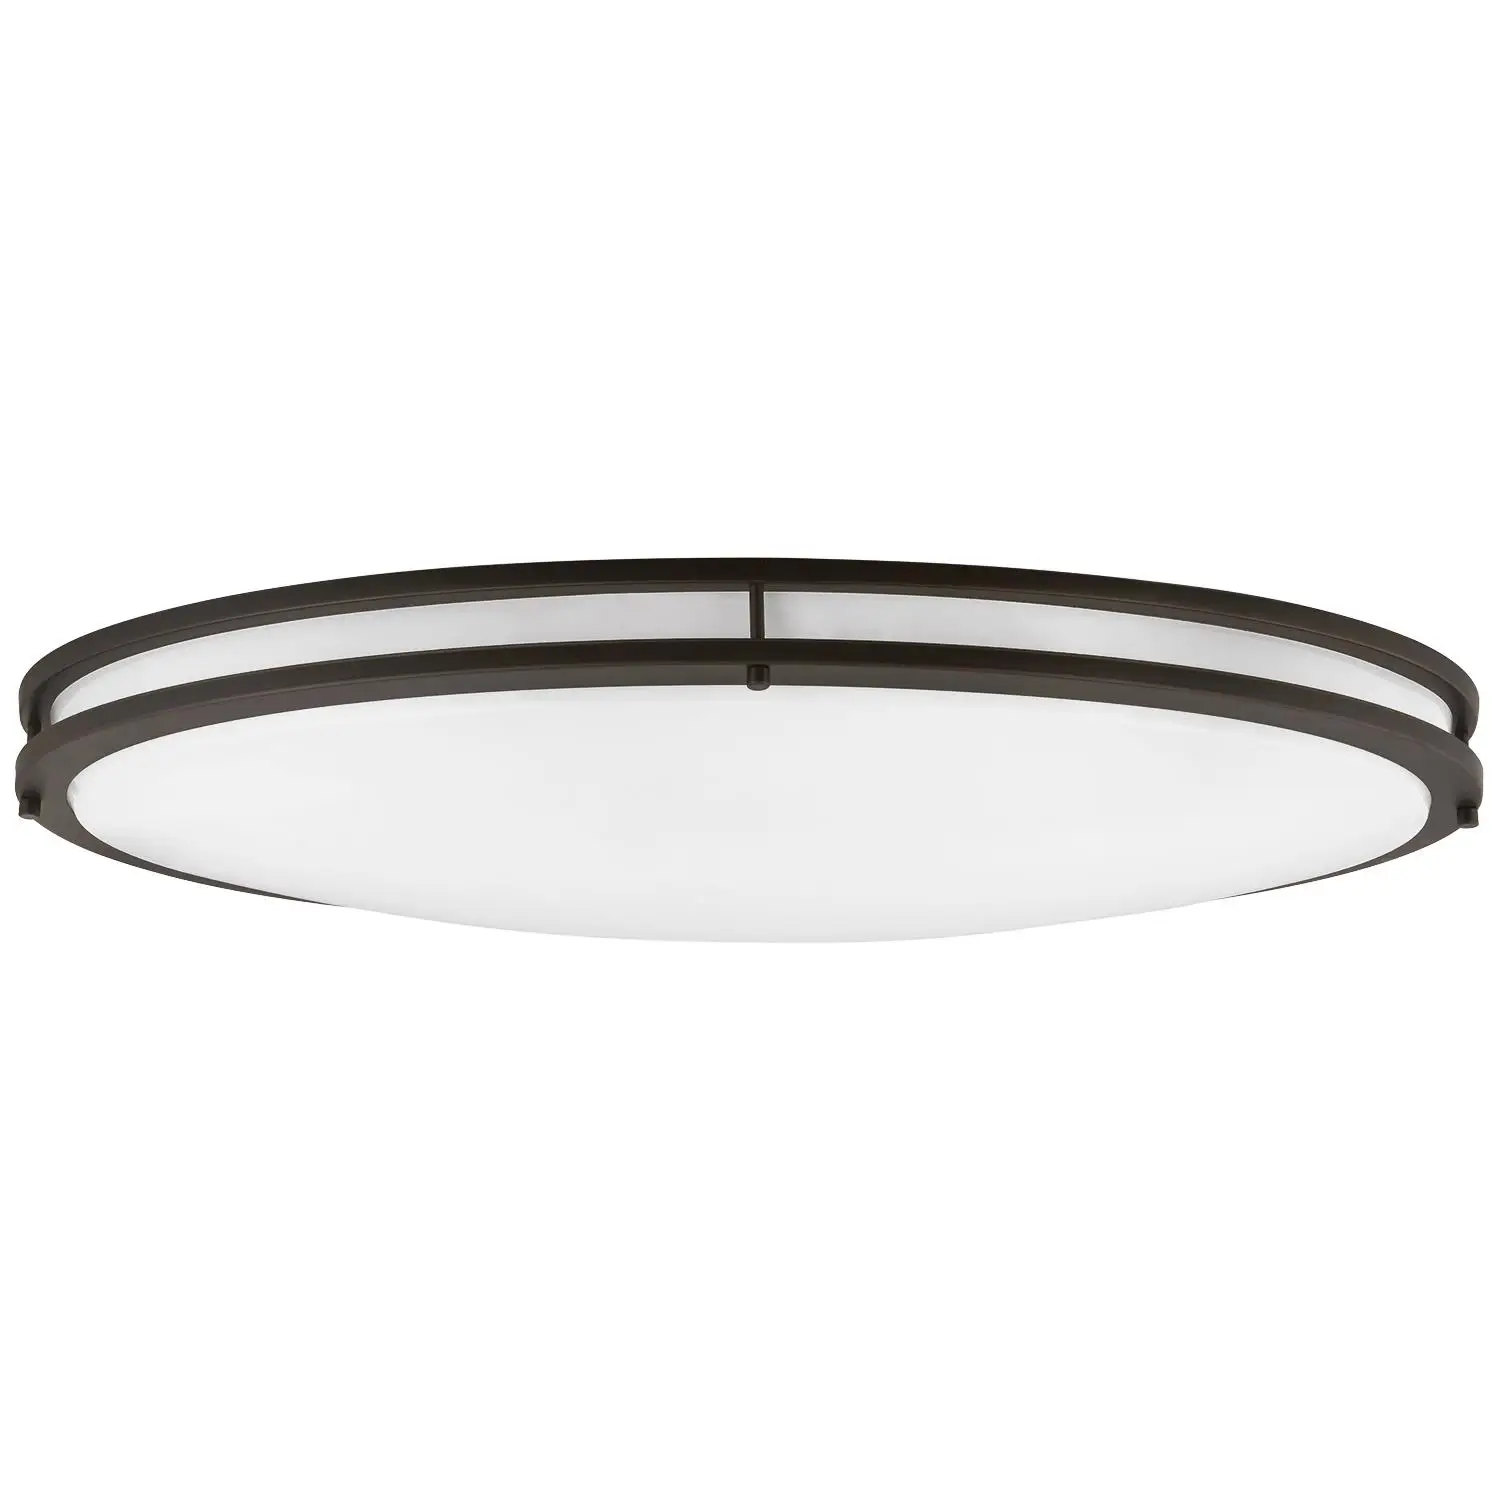 Sunlite LED 32-Inch Oval Flush Mount Ceiling Light Fixture, 30K - Warm White, Dimmable, 3200 Lumens, 40 Watts, Bronze